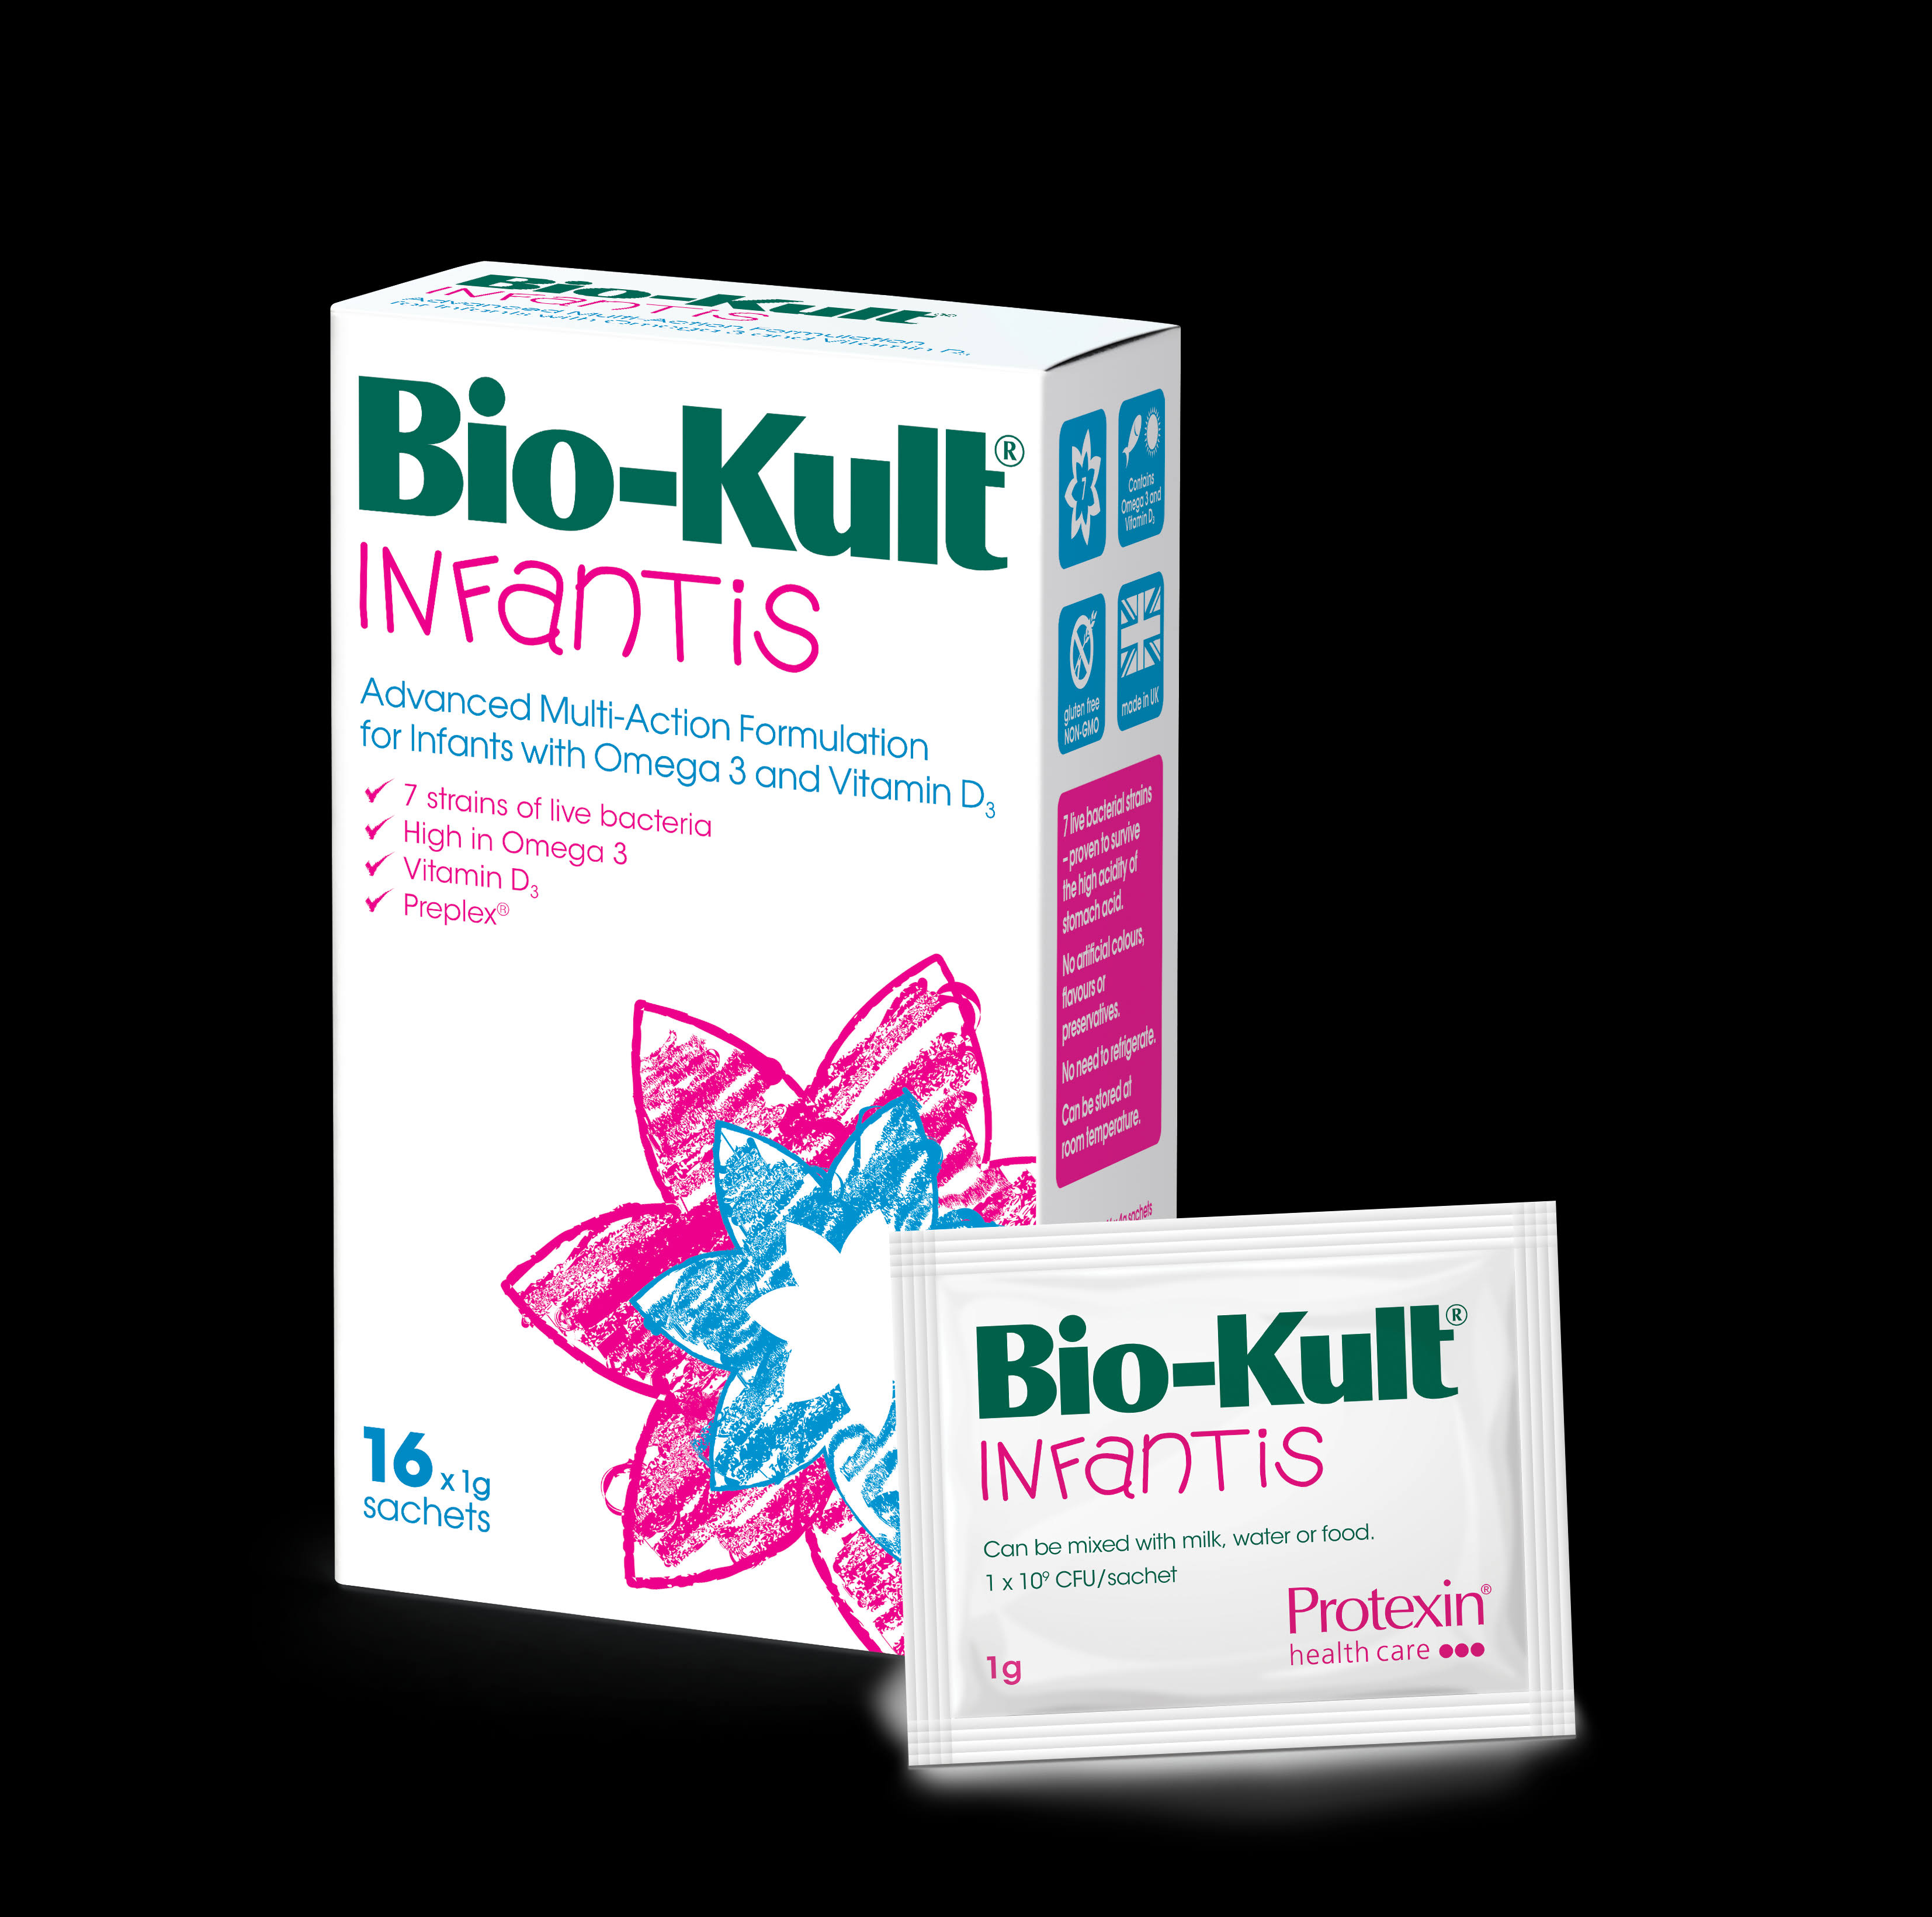 Bio-Kult Infantis Advanced Probiotic Multi Strain Formula Powder Sachet - 16ct x 1g